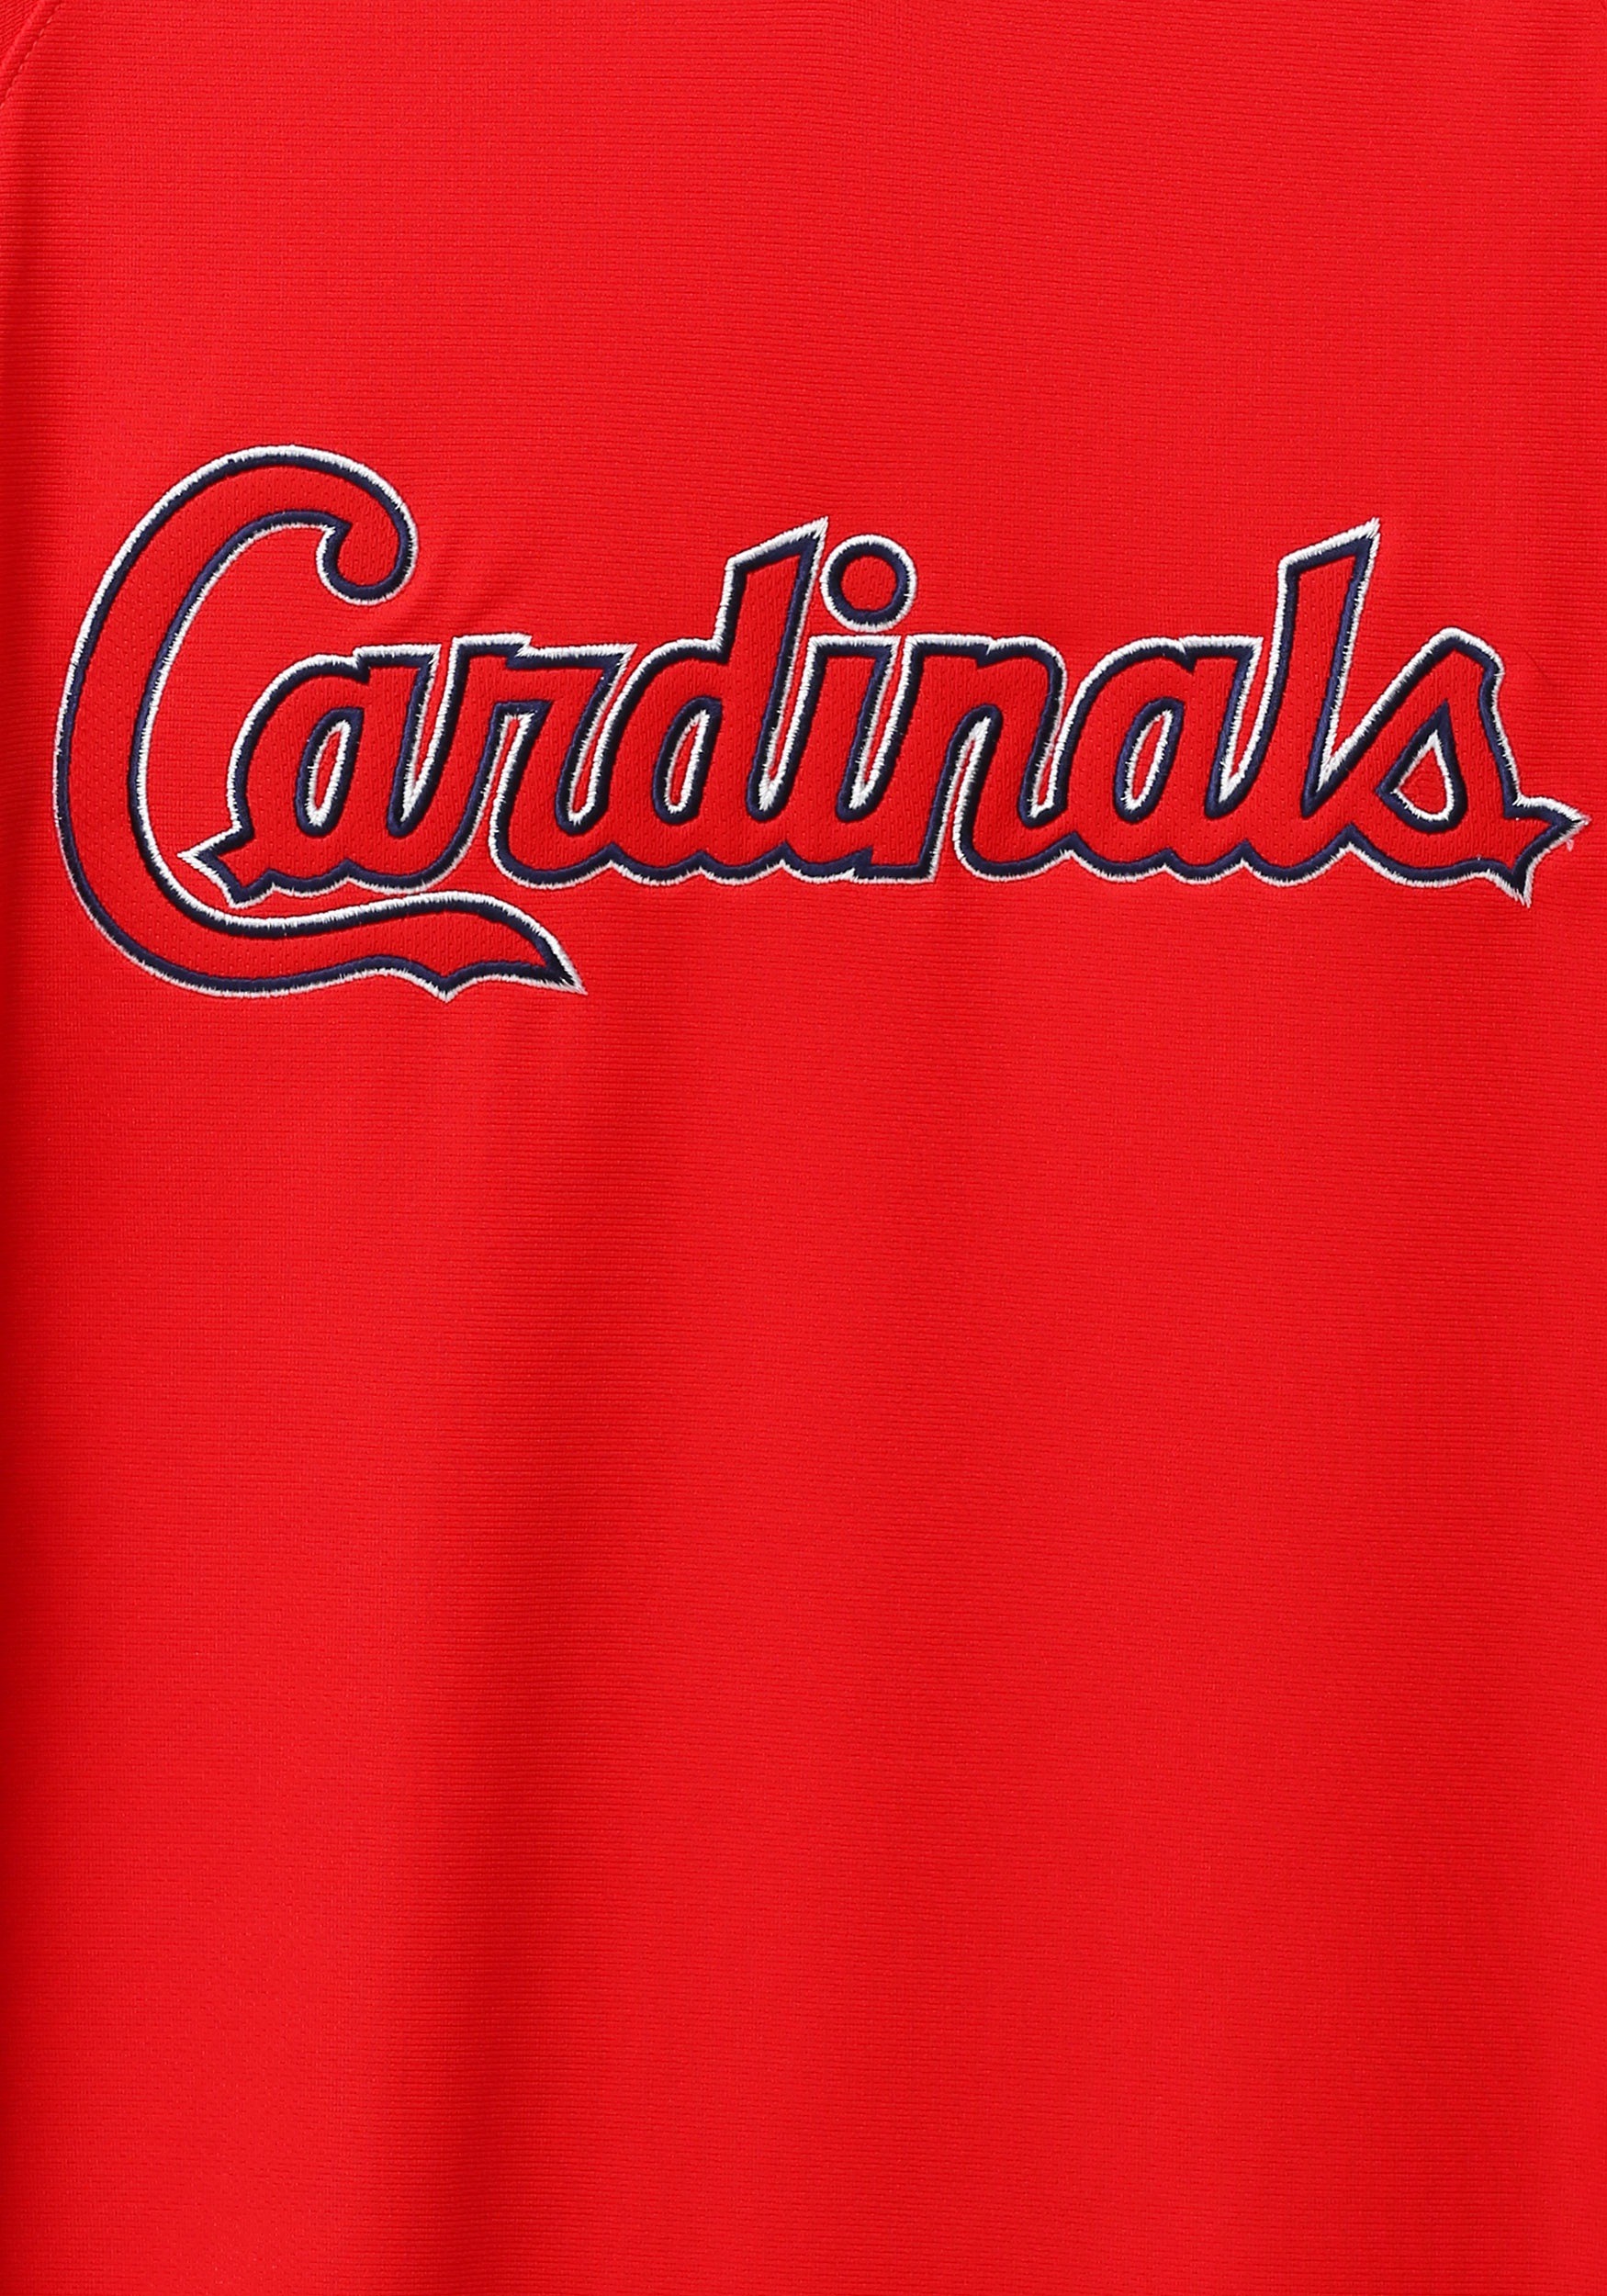 cardinals star wars jersey